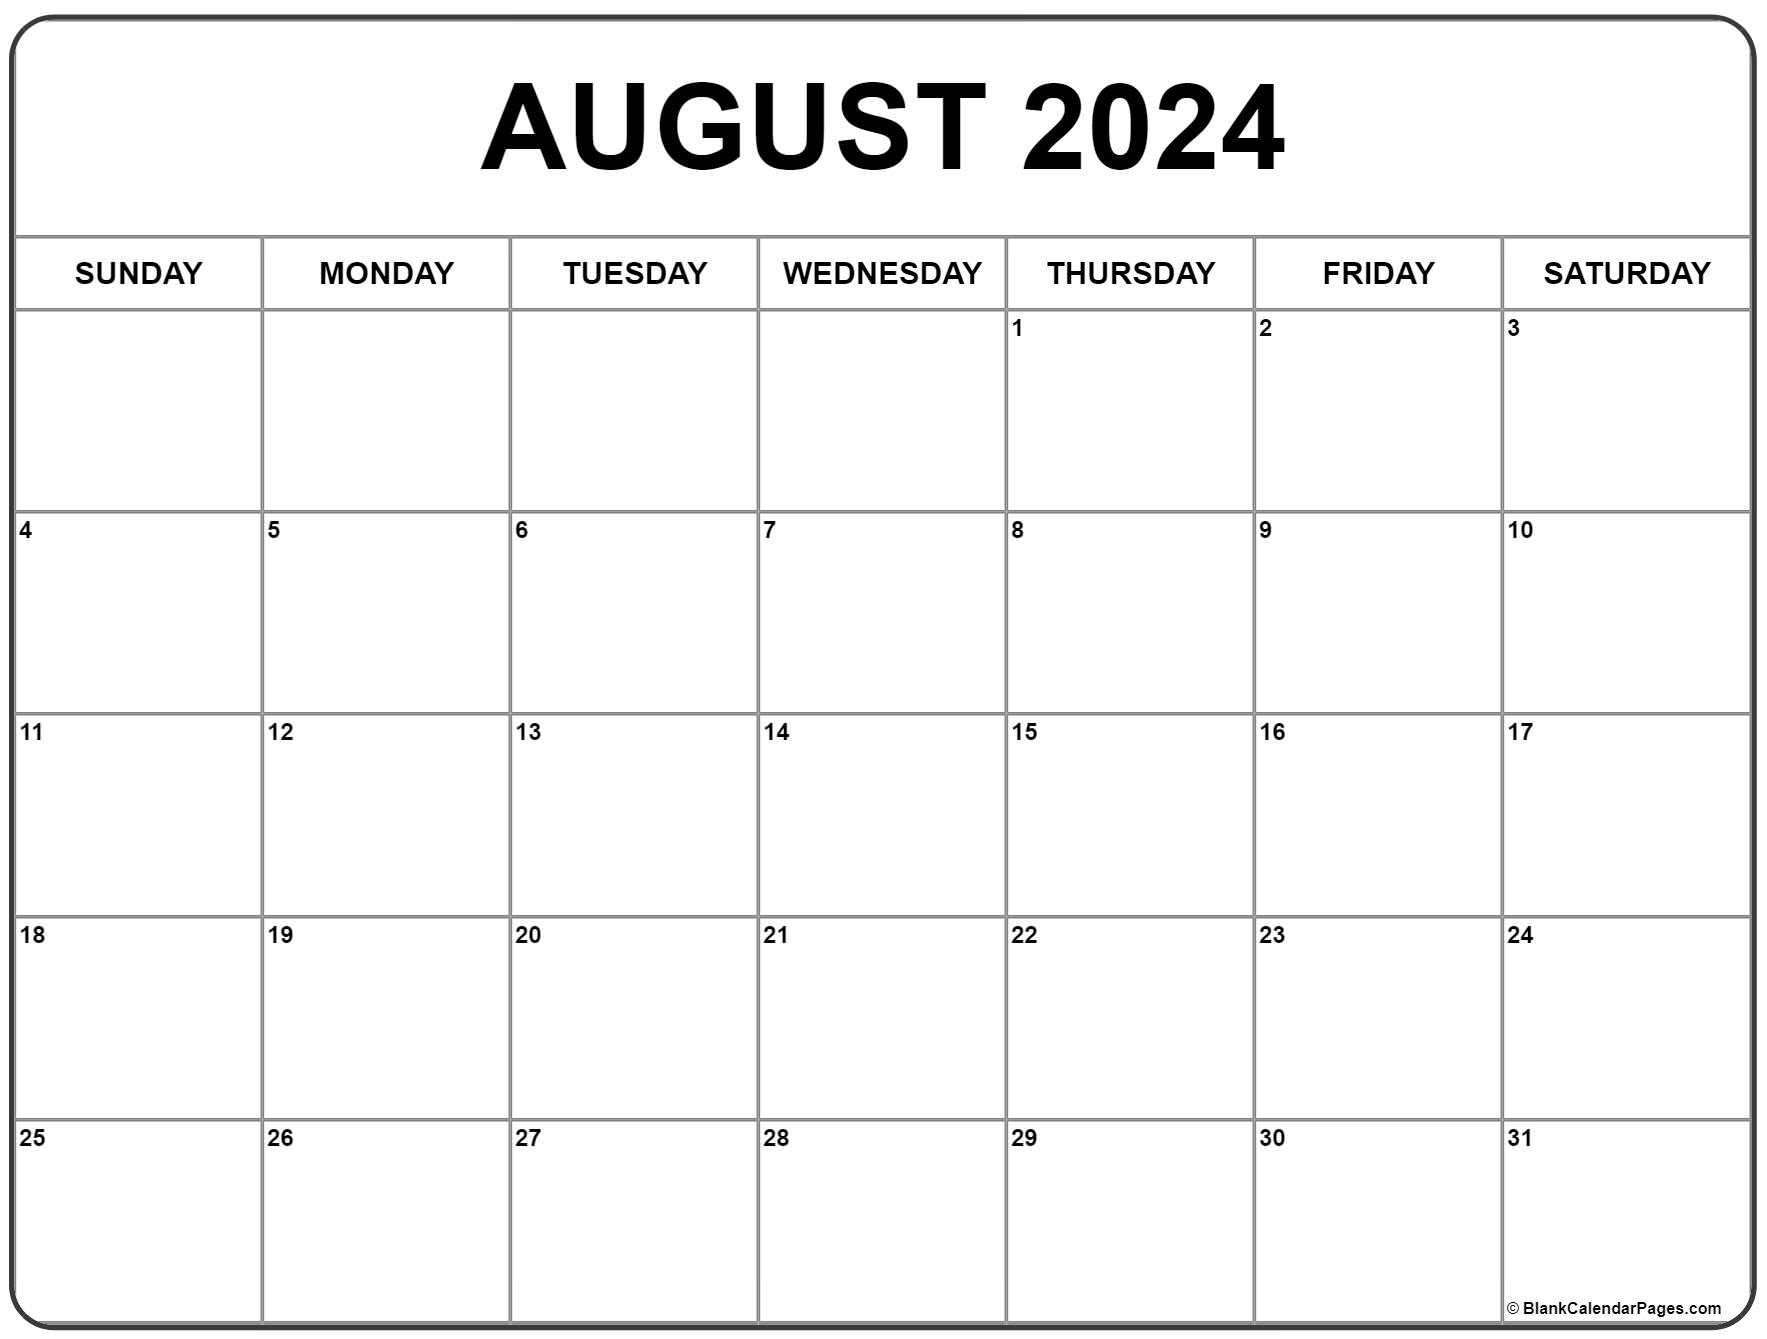 August 2024 Calendar | Free Printable Calendar for Calendar August 2024 Printable